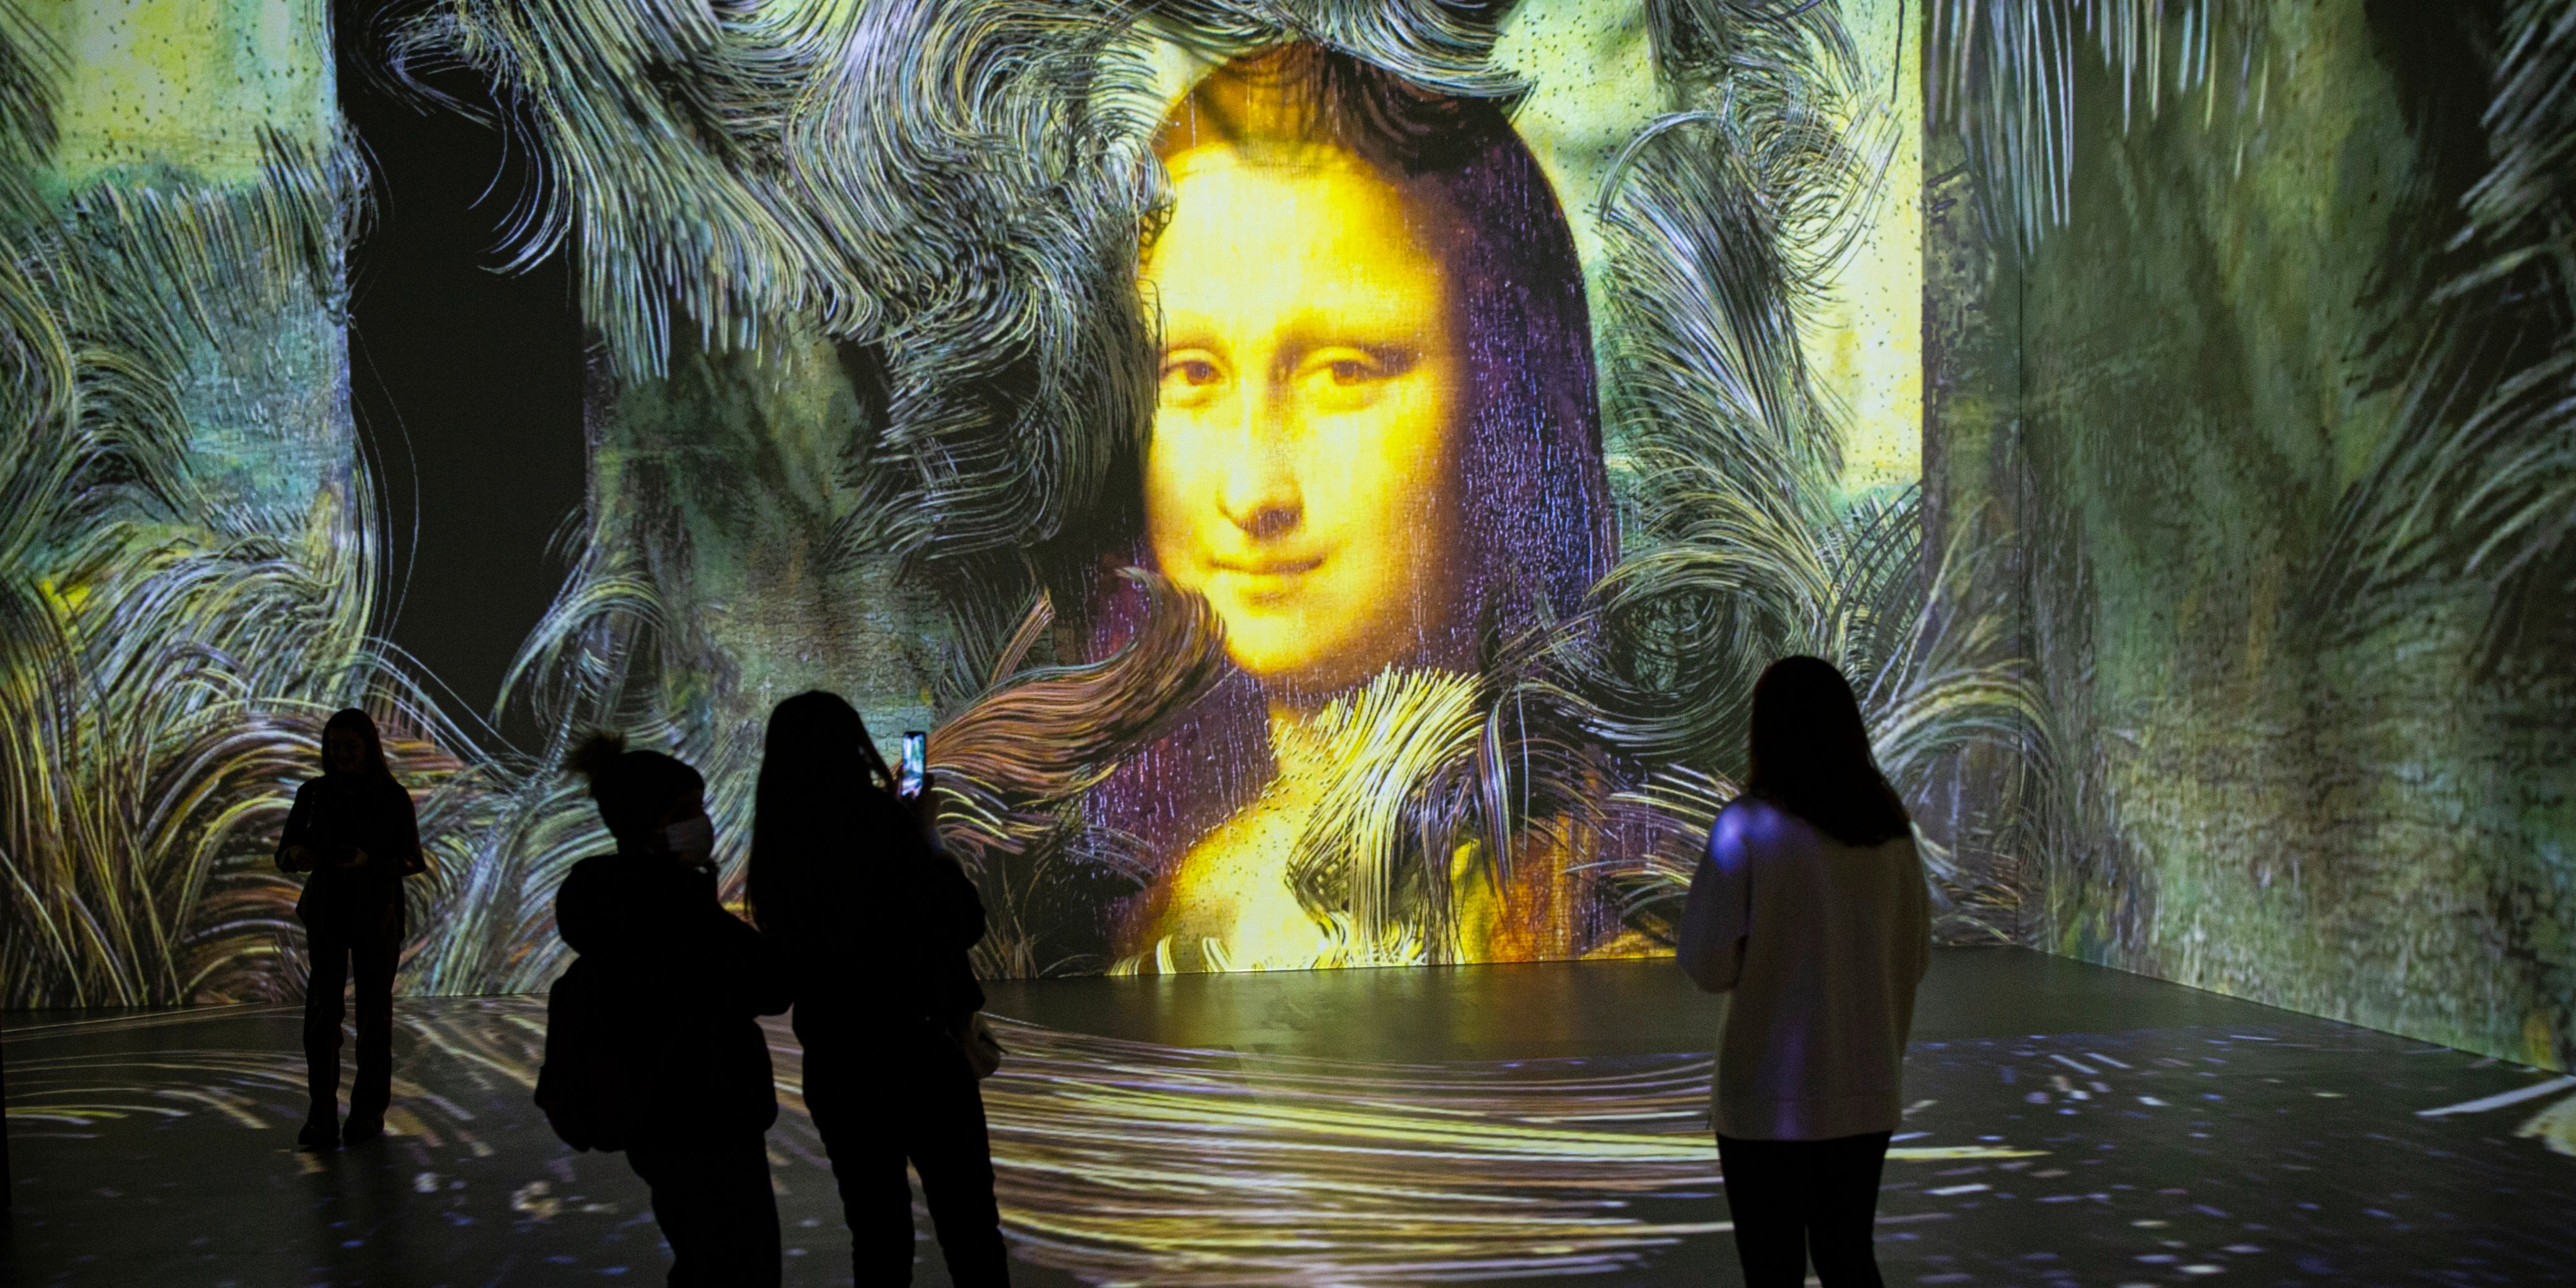 Da Vinci exhibition at X Media Art Museum